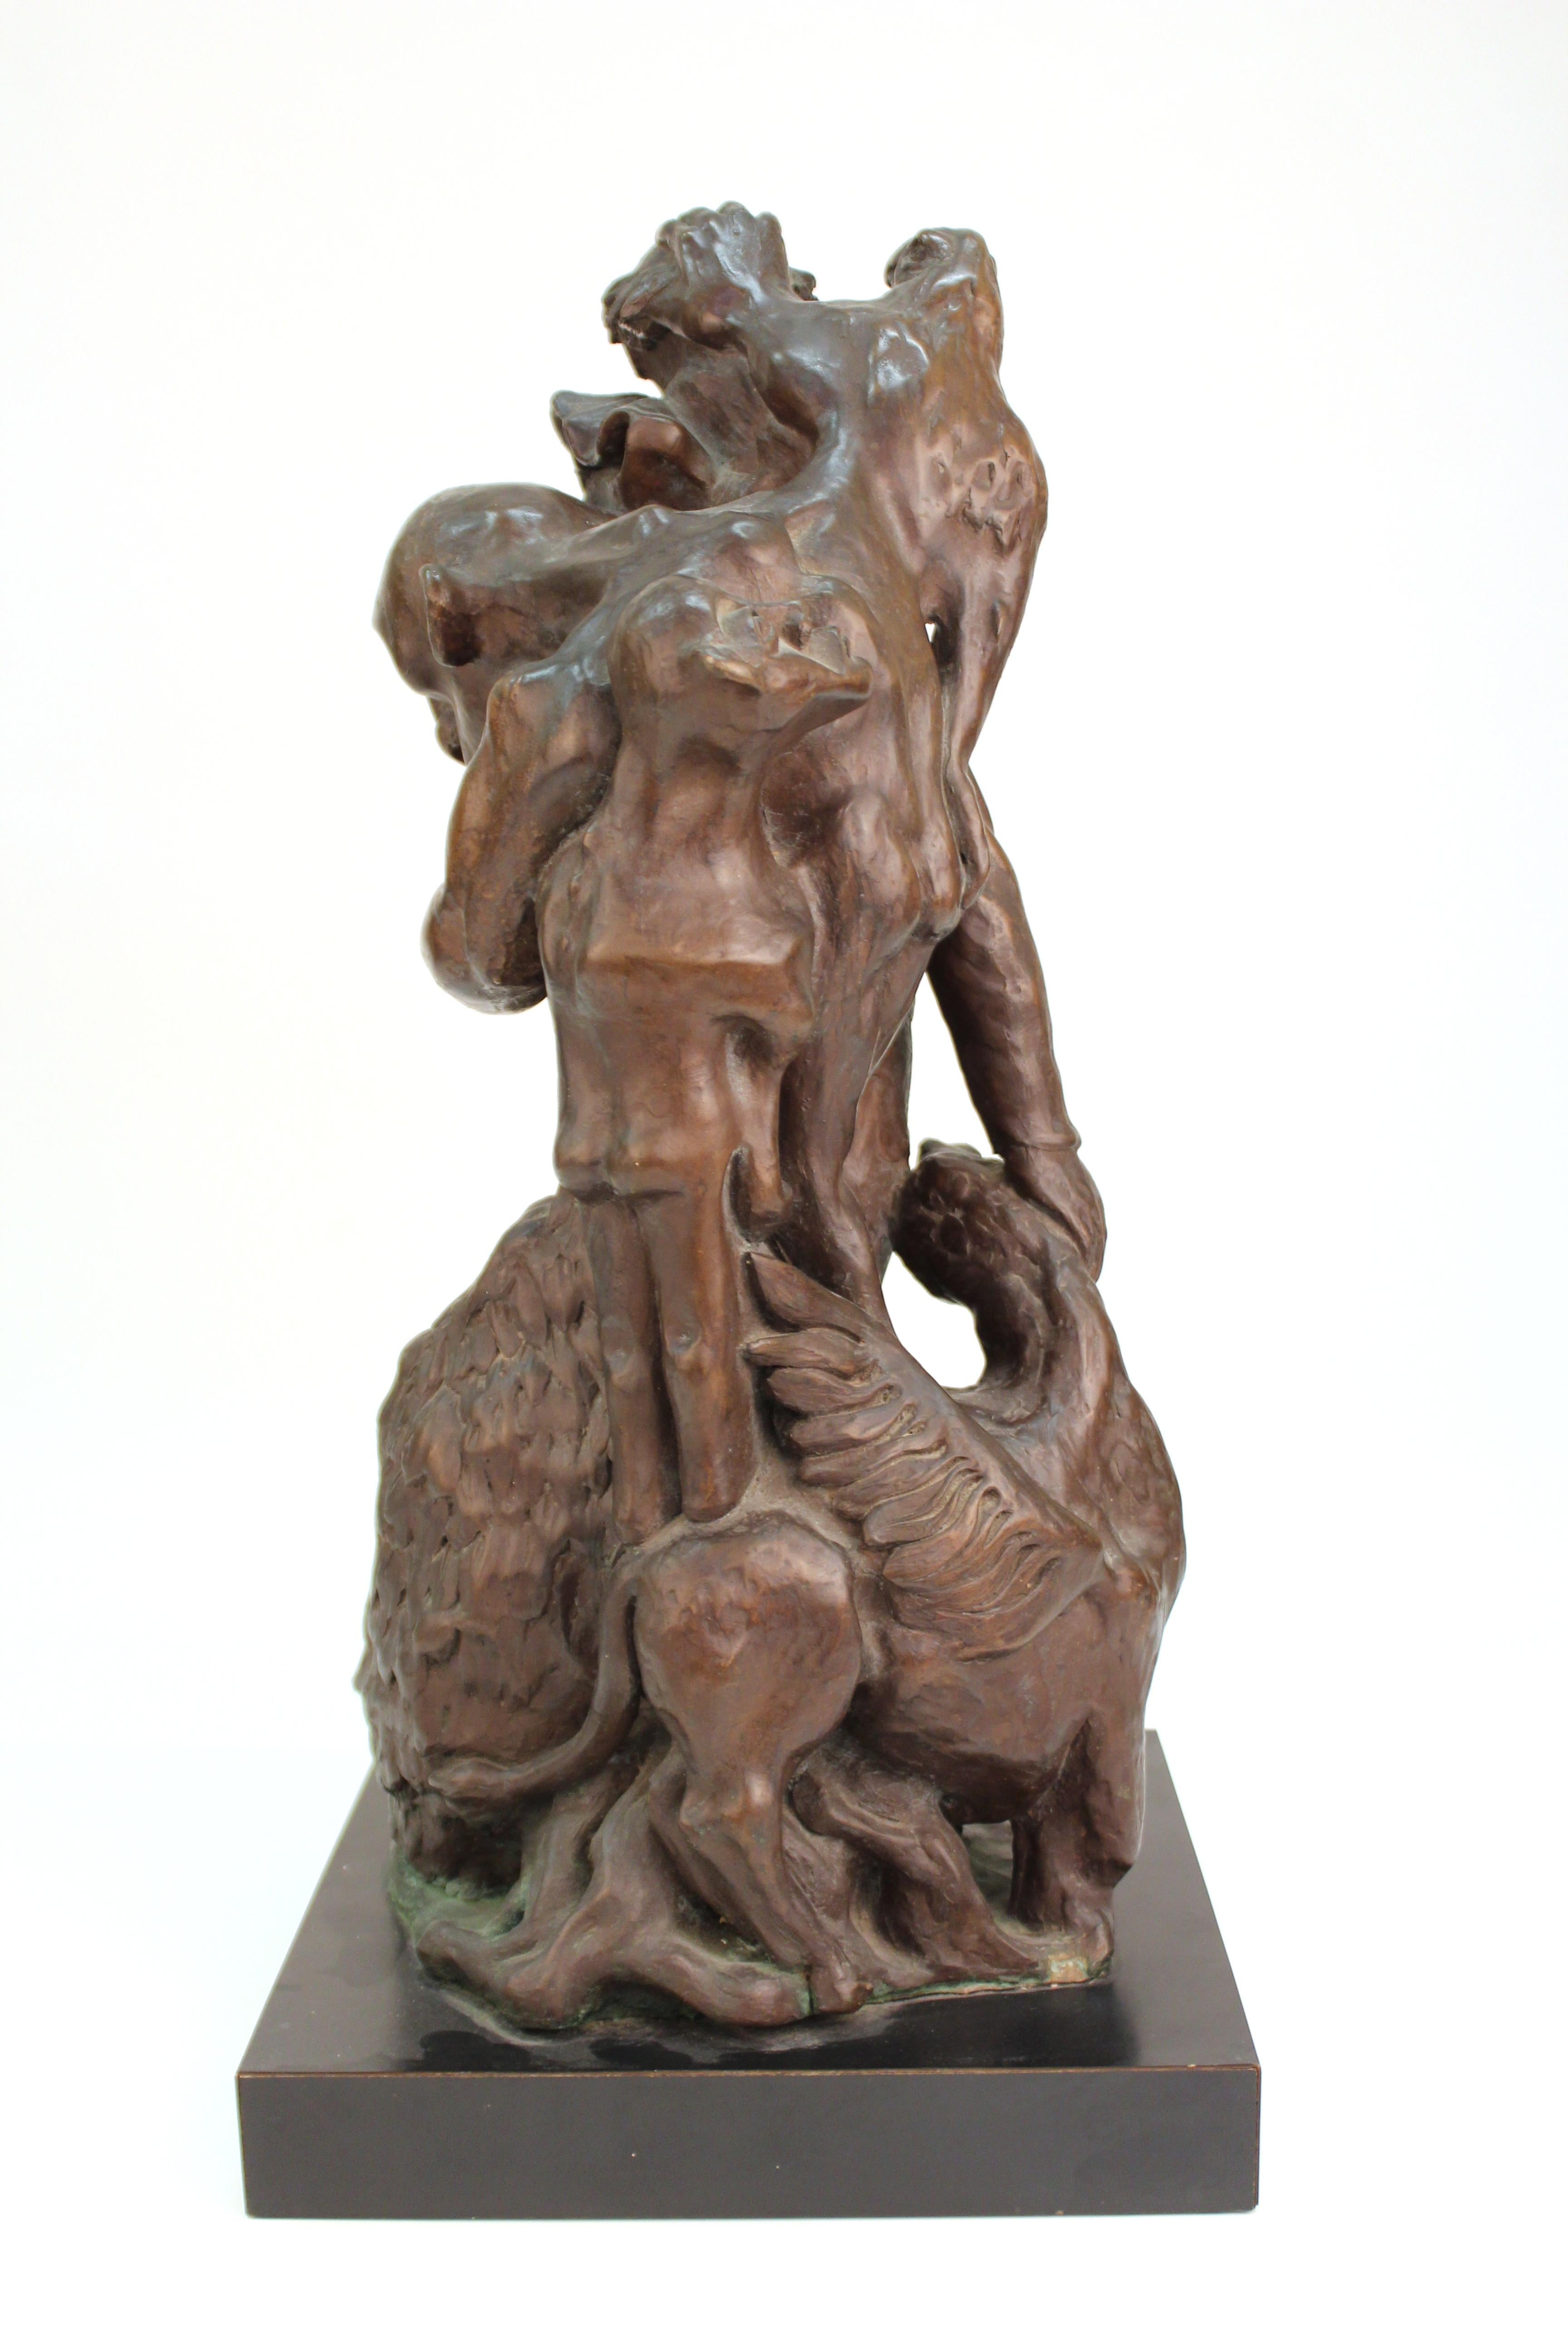 20th Century Mid-Century Modern Sculptural Clown Group in Bronzed Terracotta